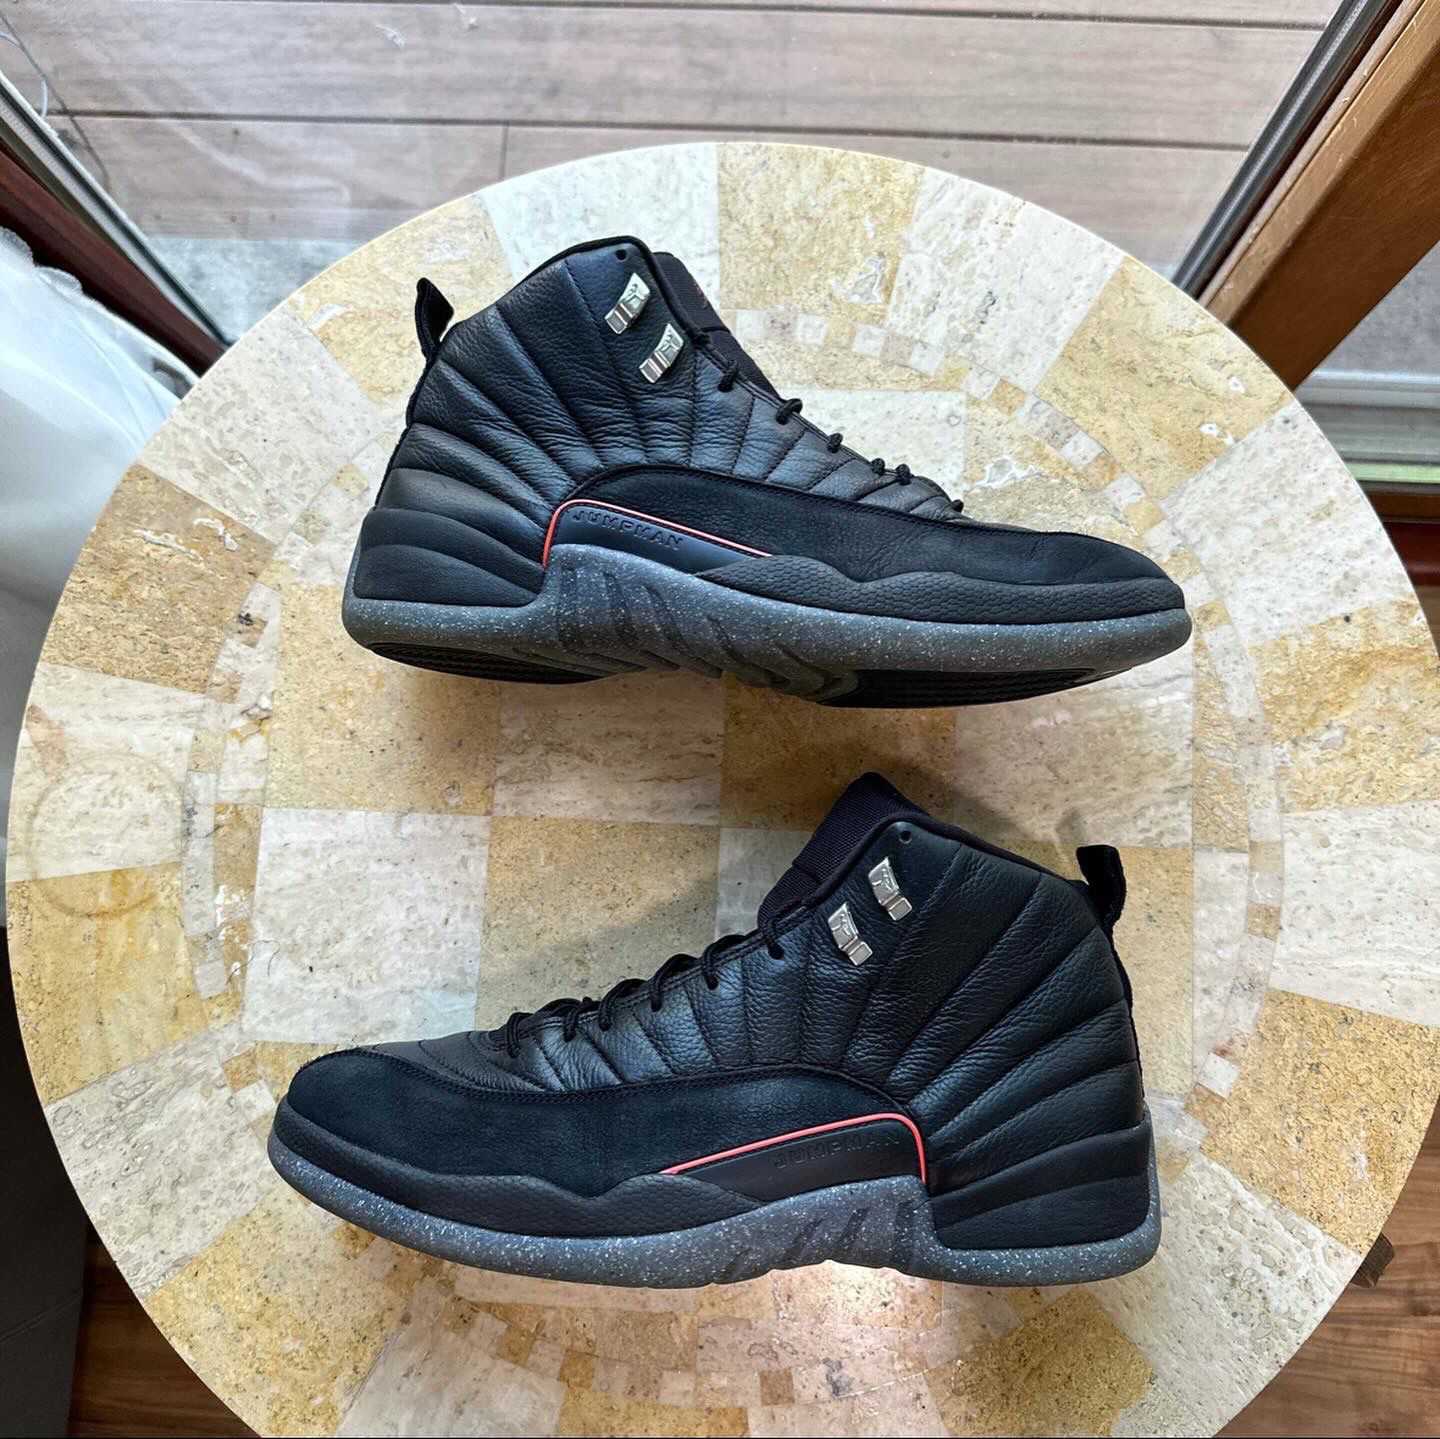 Nike Air Jordan 12 Utility Grind Size 14 Men’s 